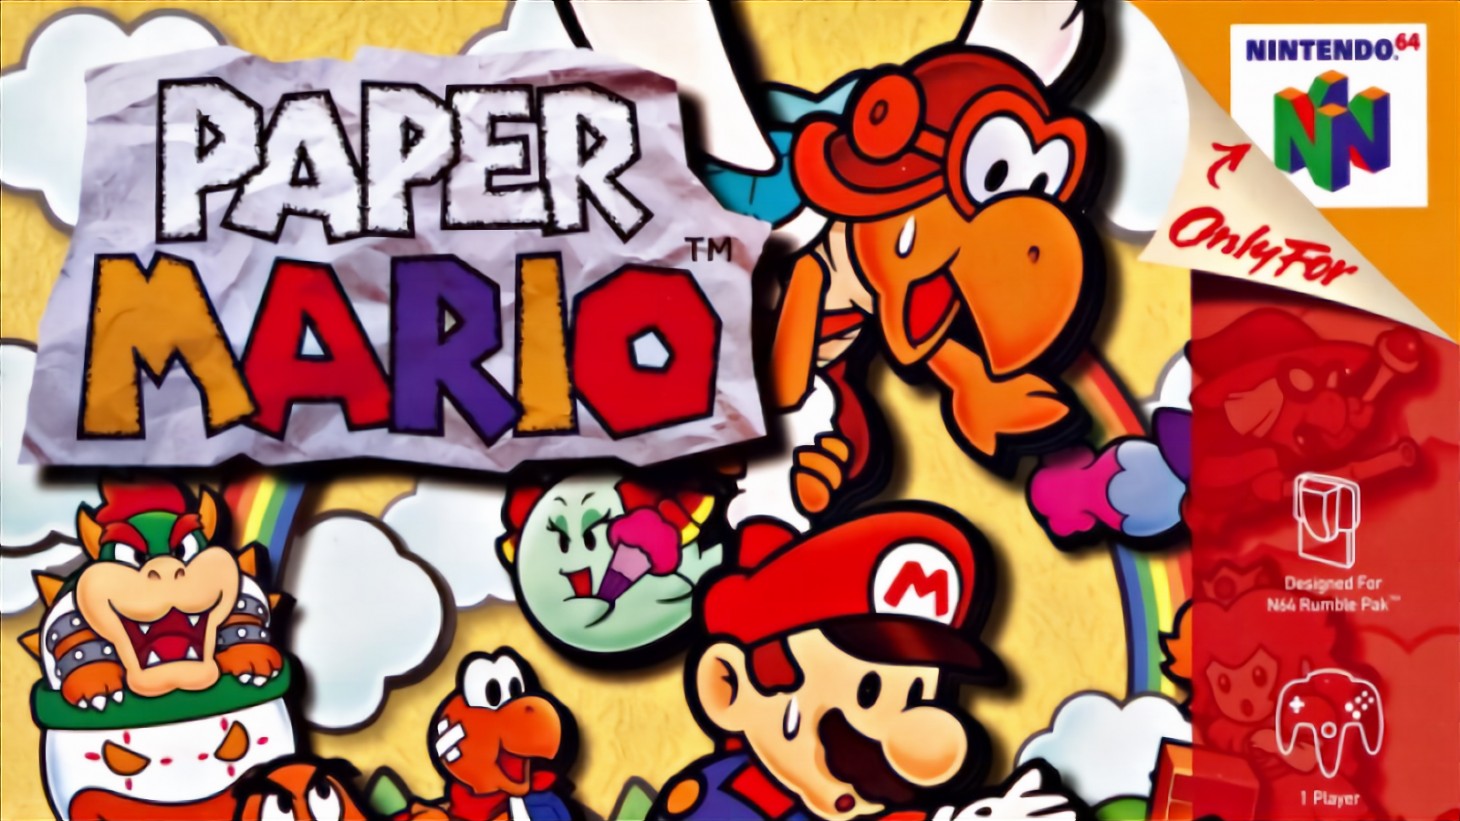 staining principle tyrant Paper Mario Coming To Nintendo Switch Online Next Week - Game Informer